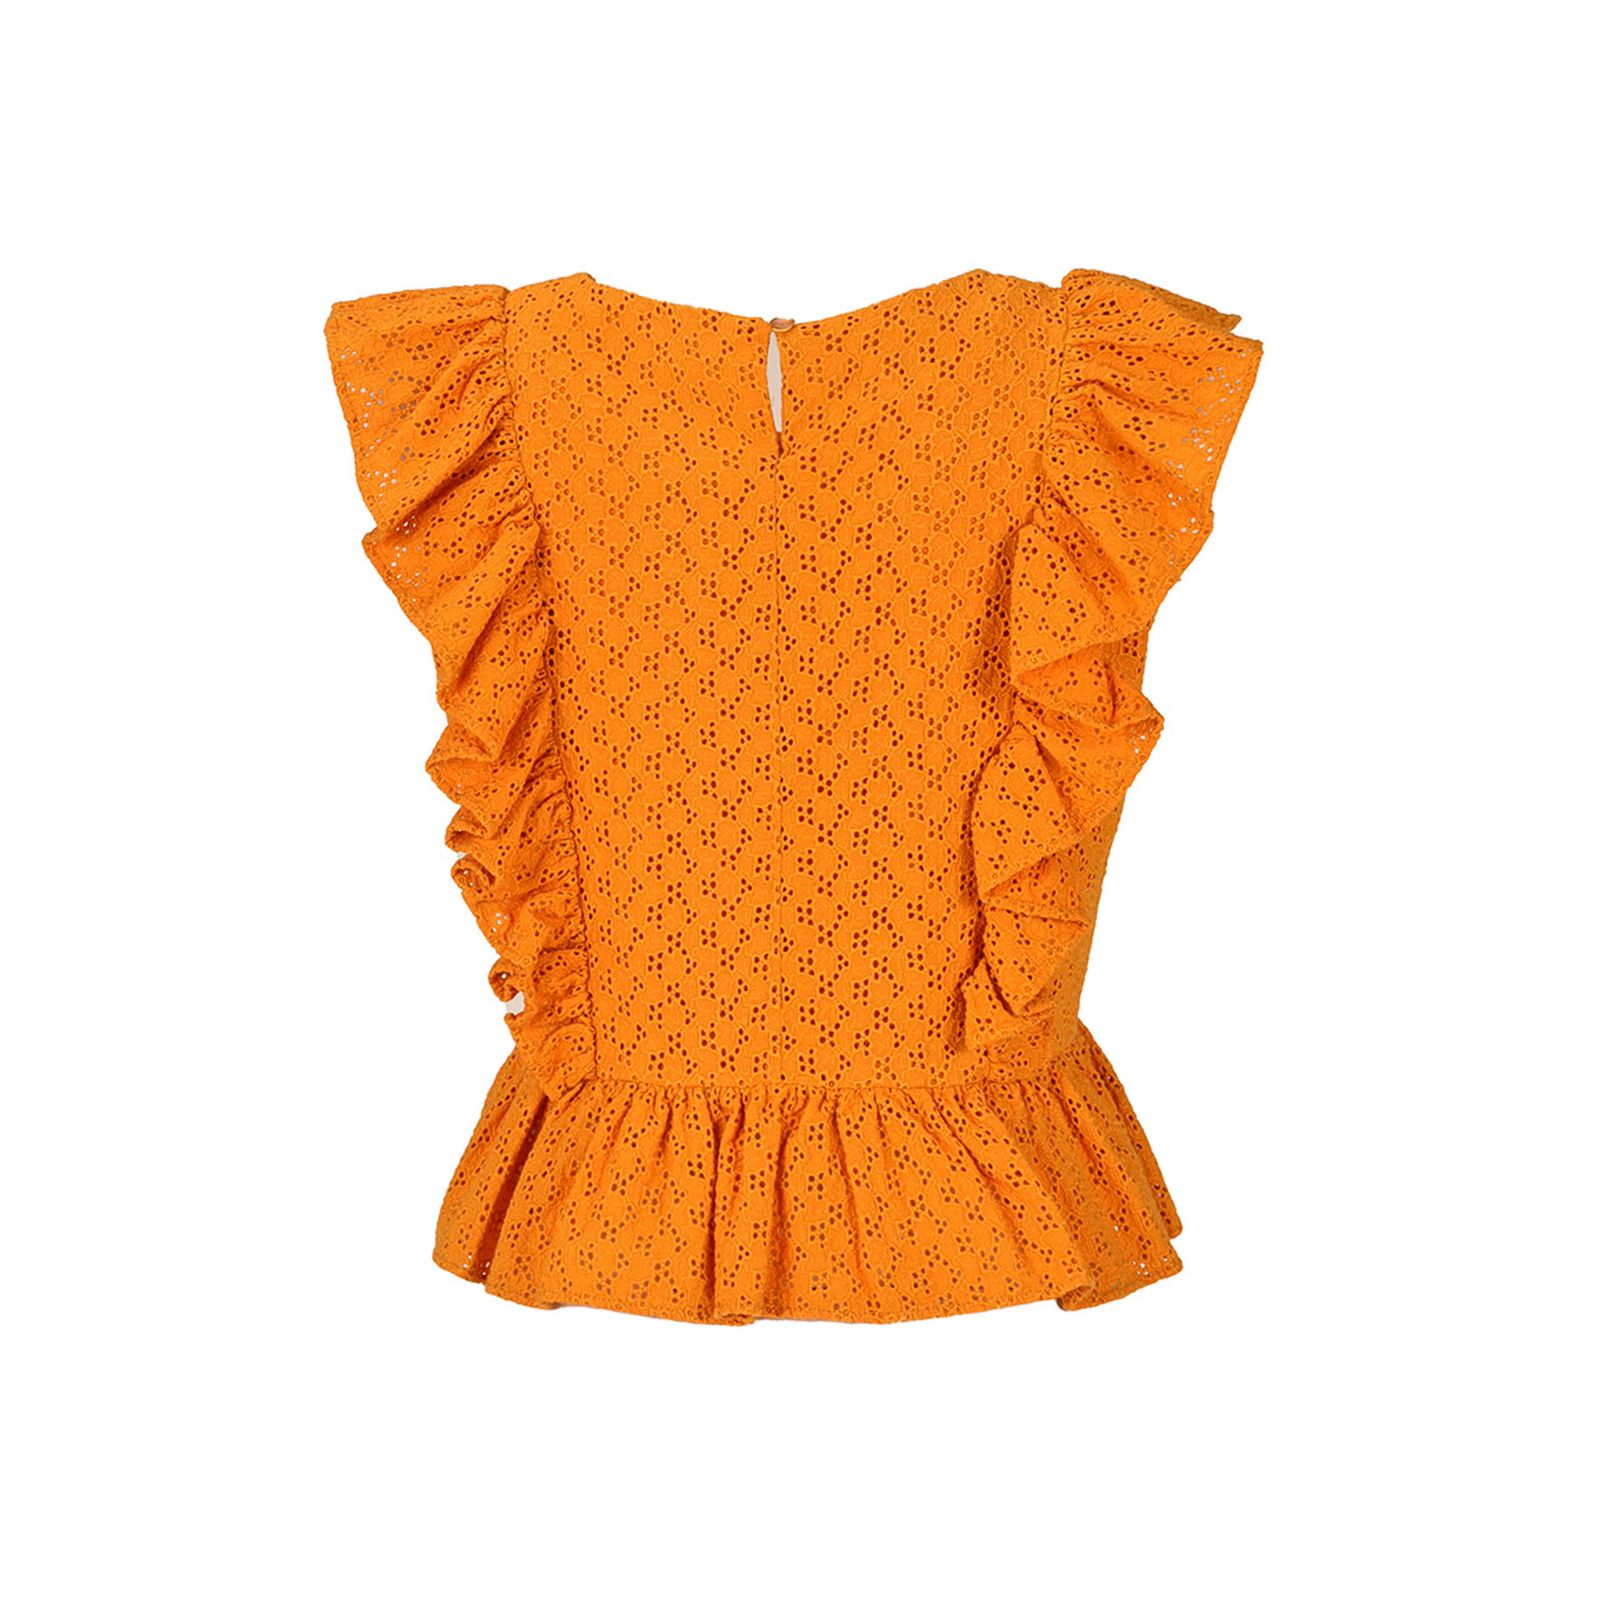 بلوز آستین کوتاه زنانه بادی اسپینر مدل 3883 کد 1 رنگ نارنجی -  - 3